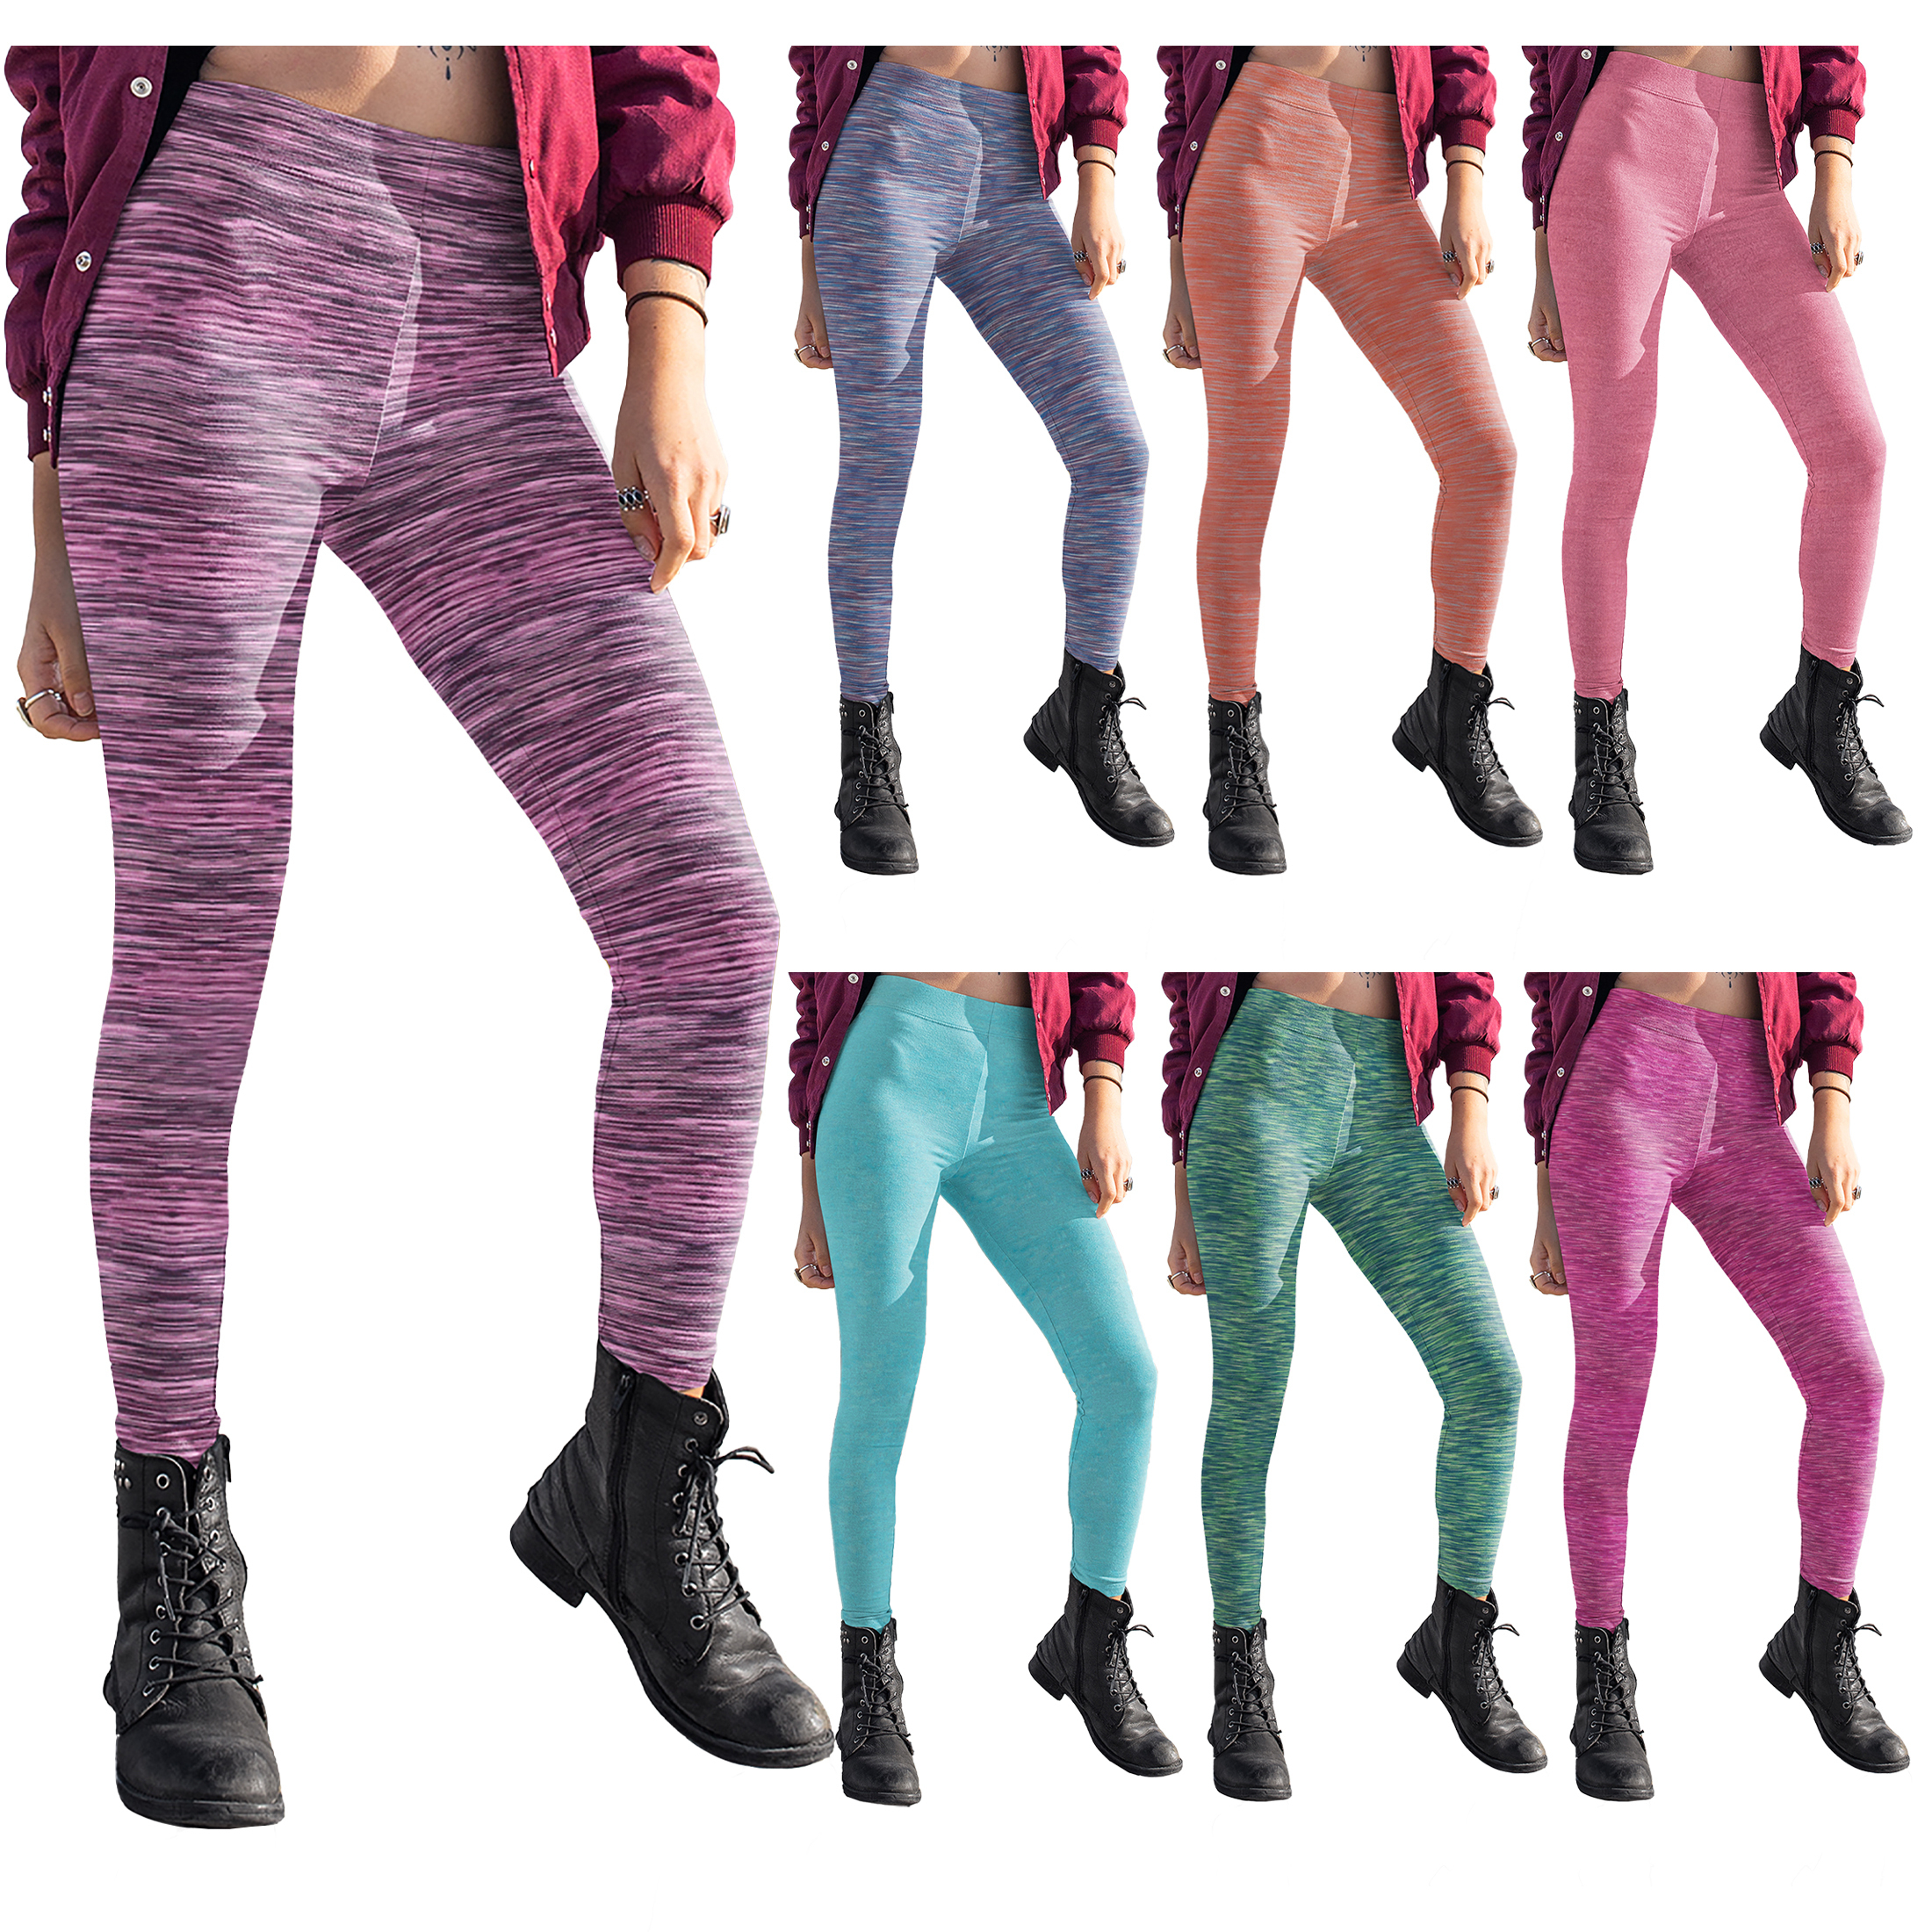 2-Pack: Women's Space Dye Seamless Leggings - Medium